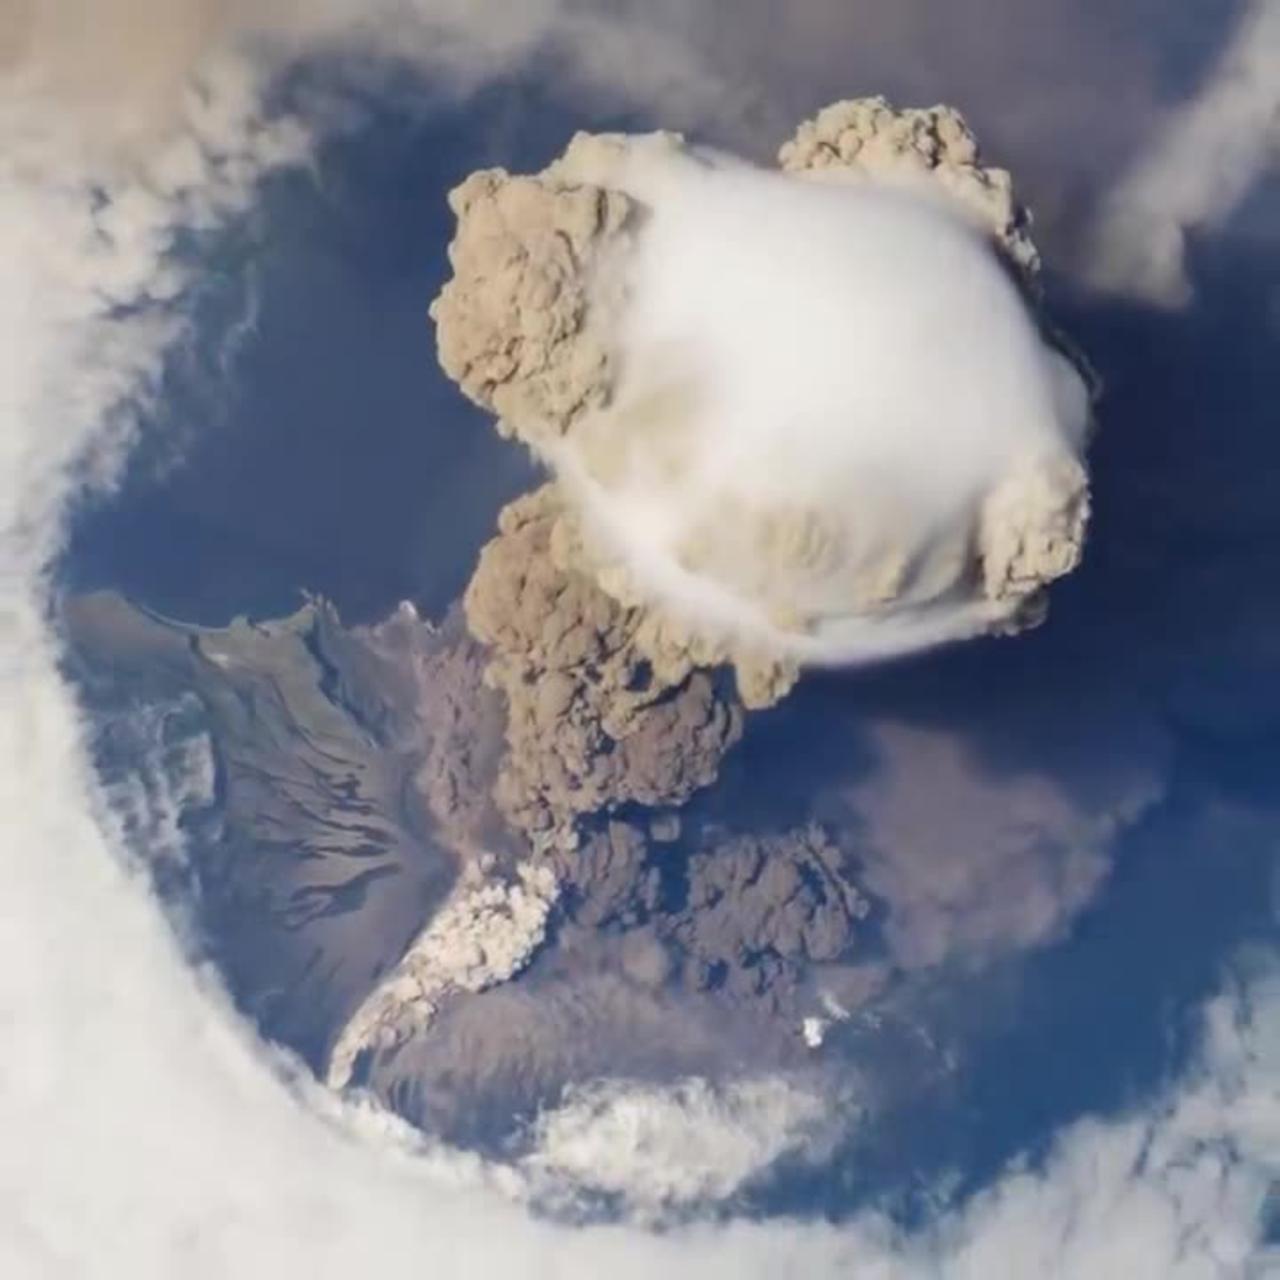 NASA | Sarychev Volcano Eruption from the international space station